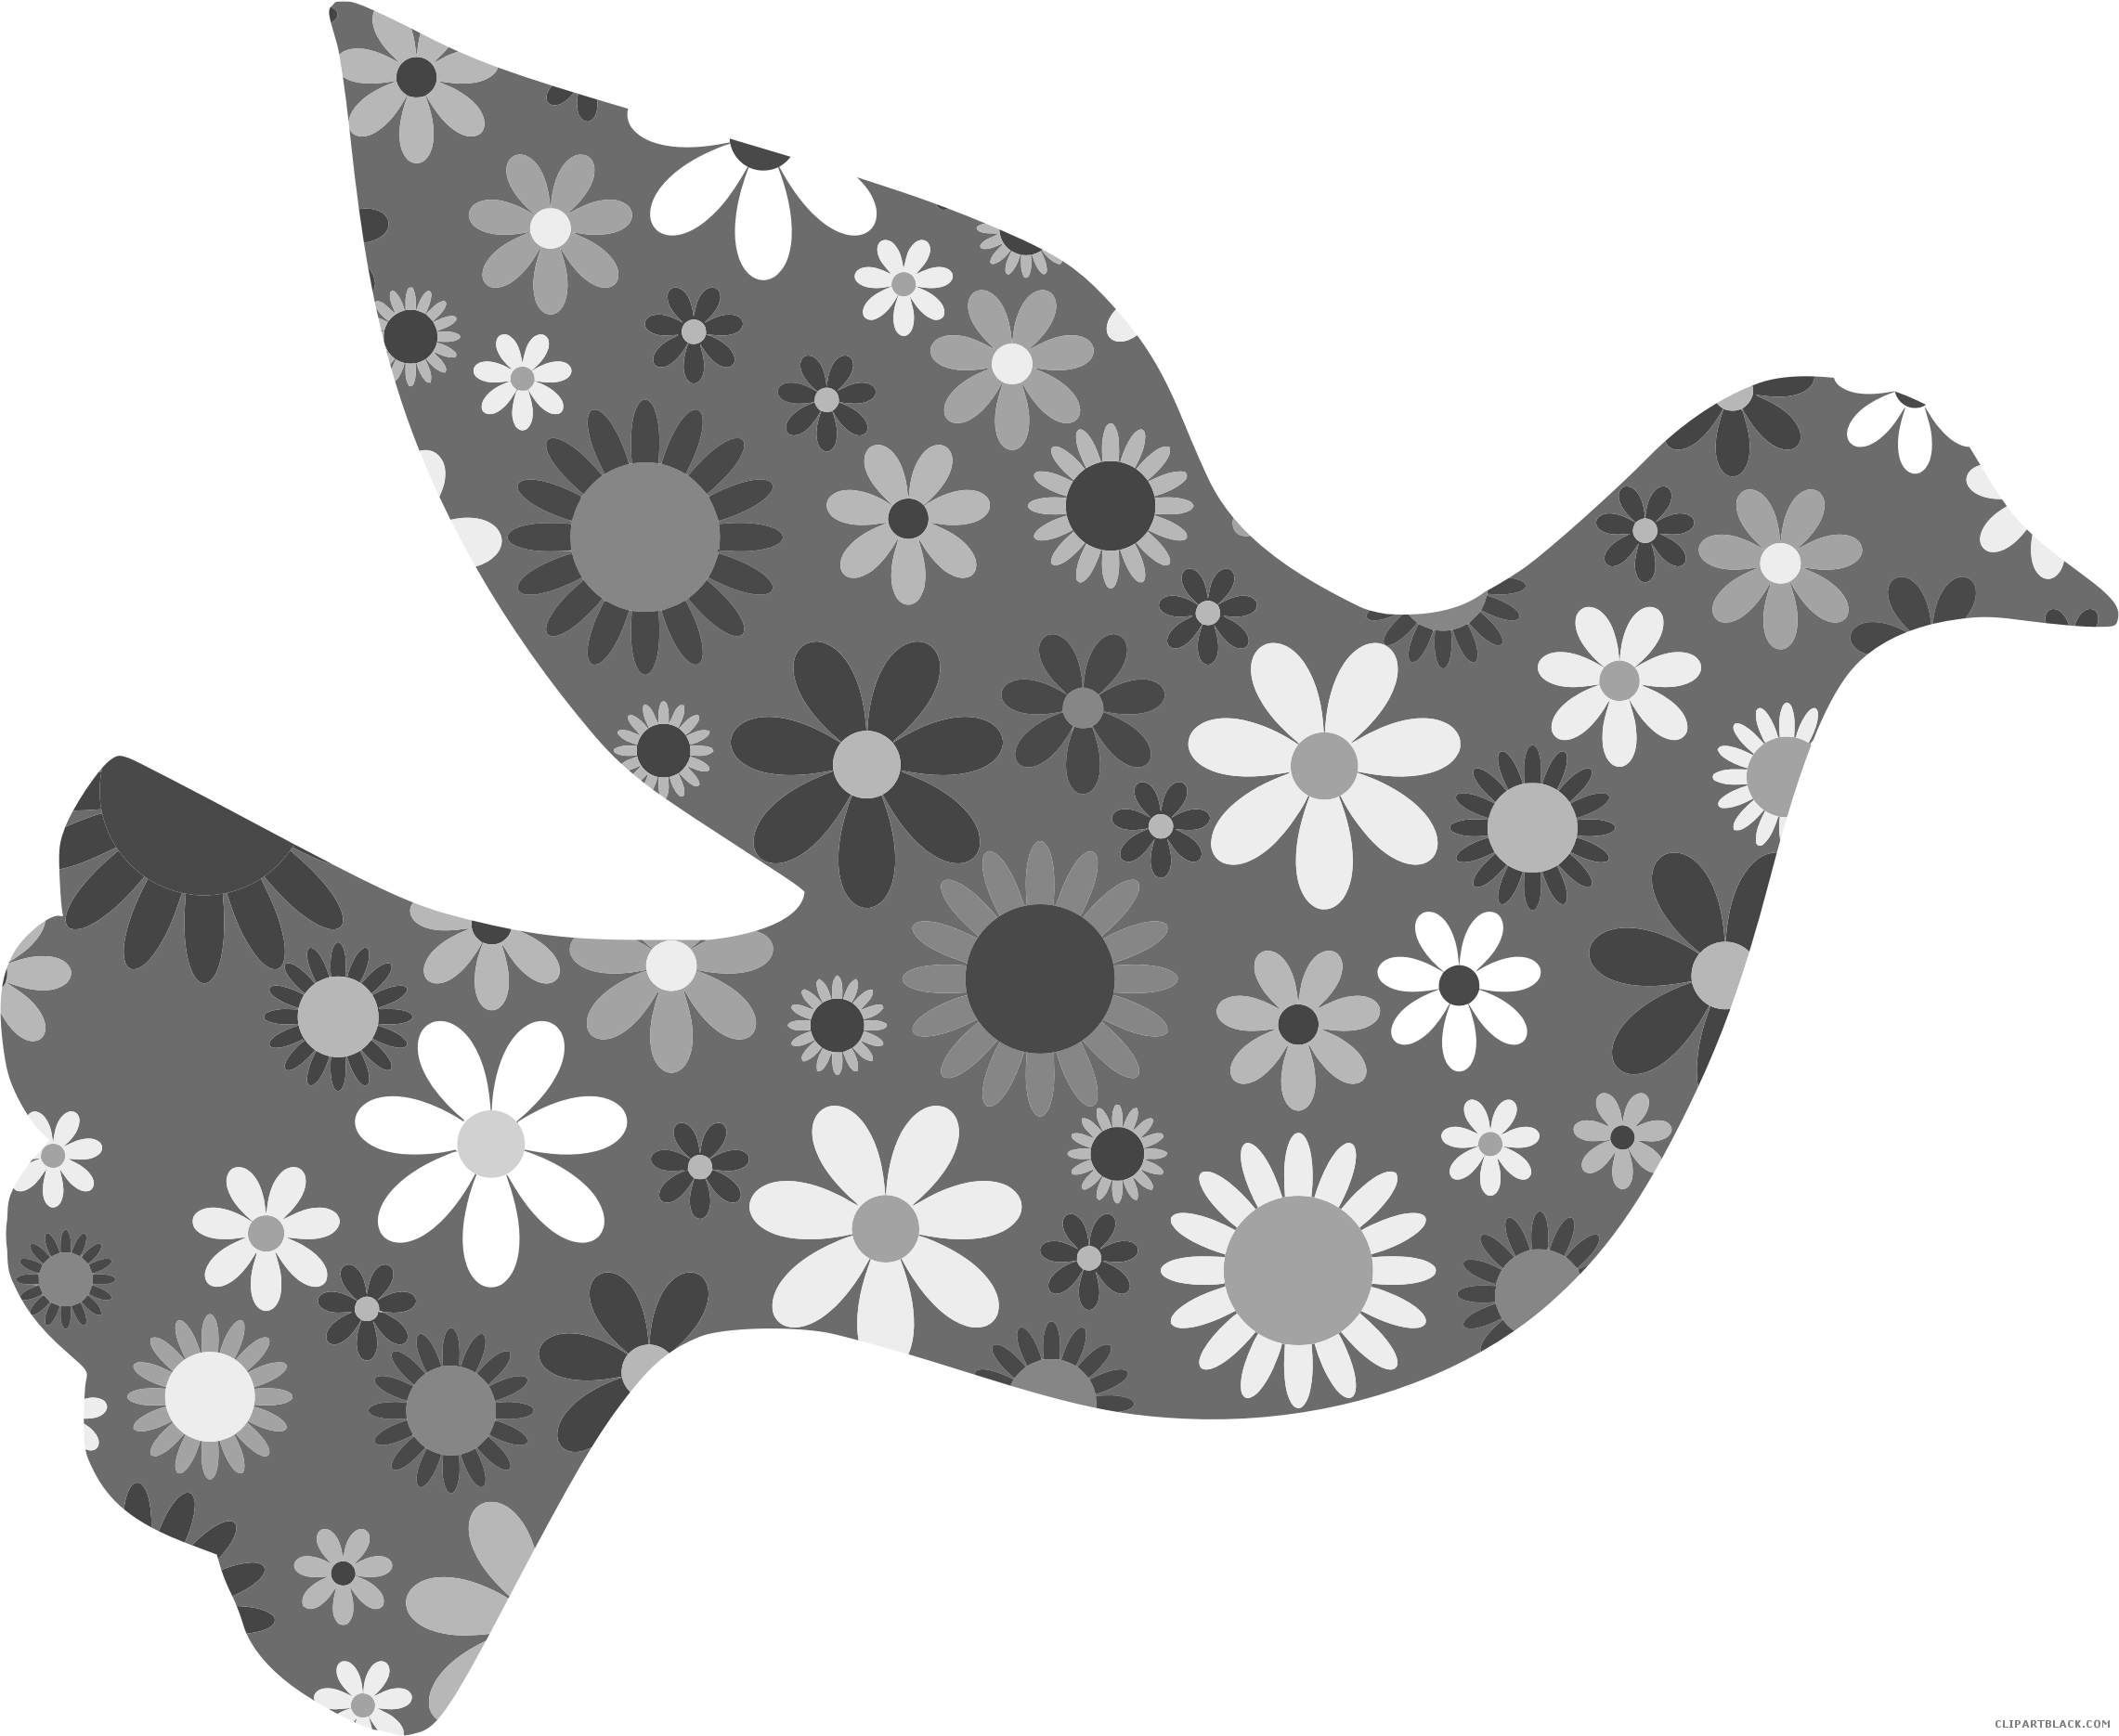 Peace dove animal free. Democracy clipart gavel